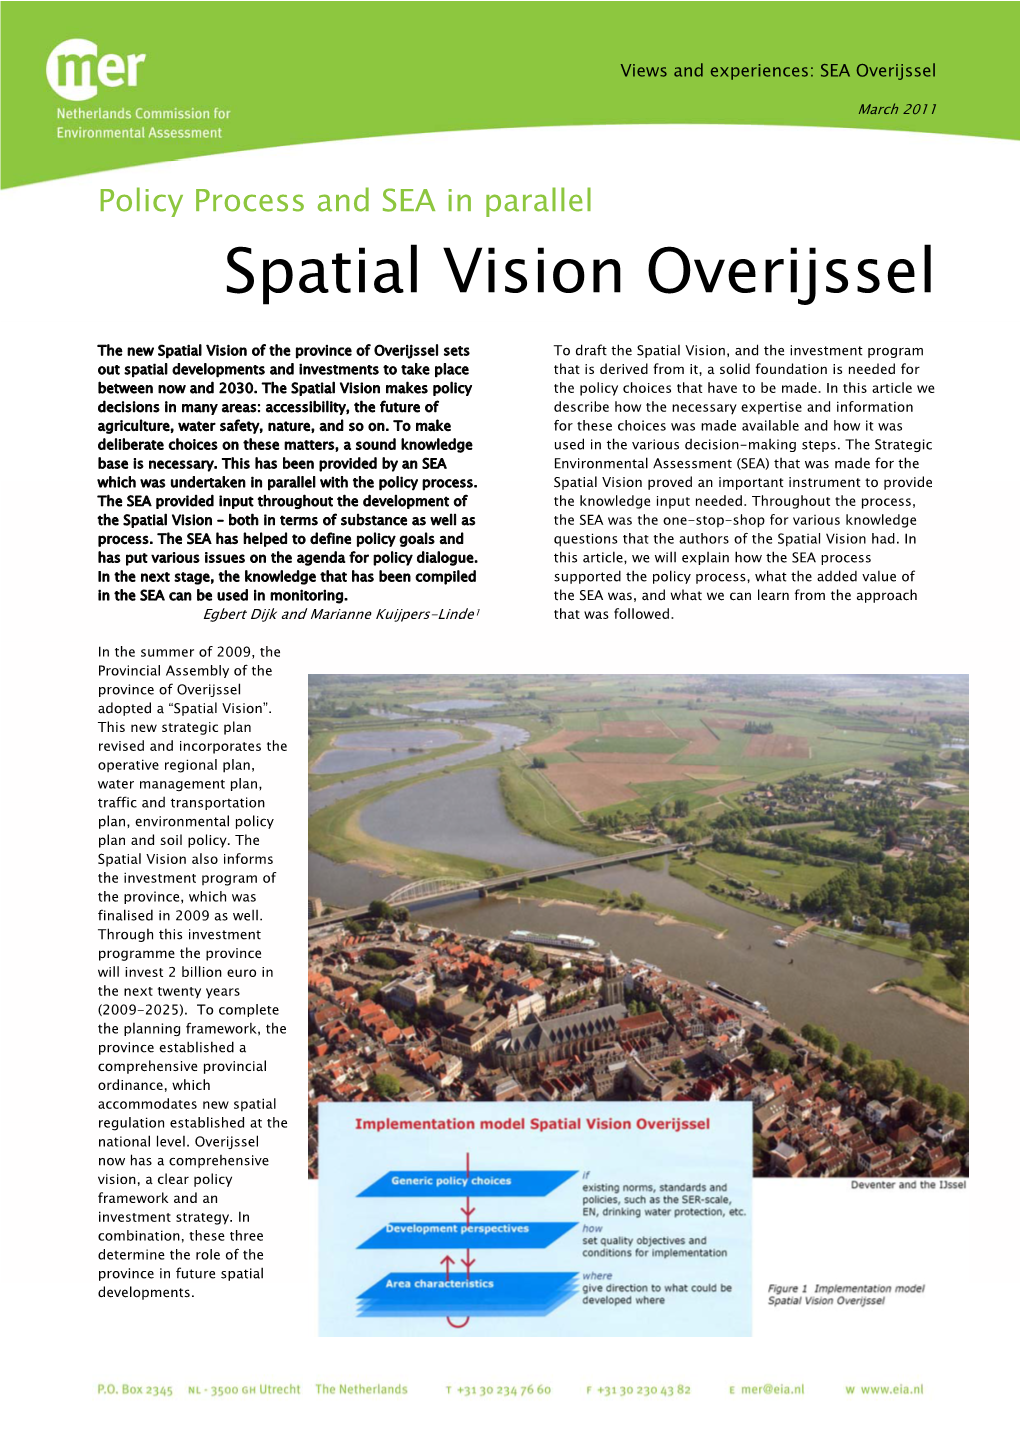 Spatial Vision Overijssel